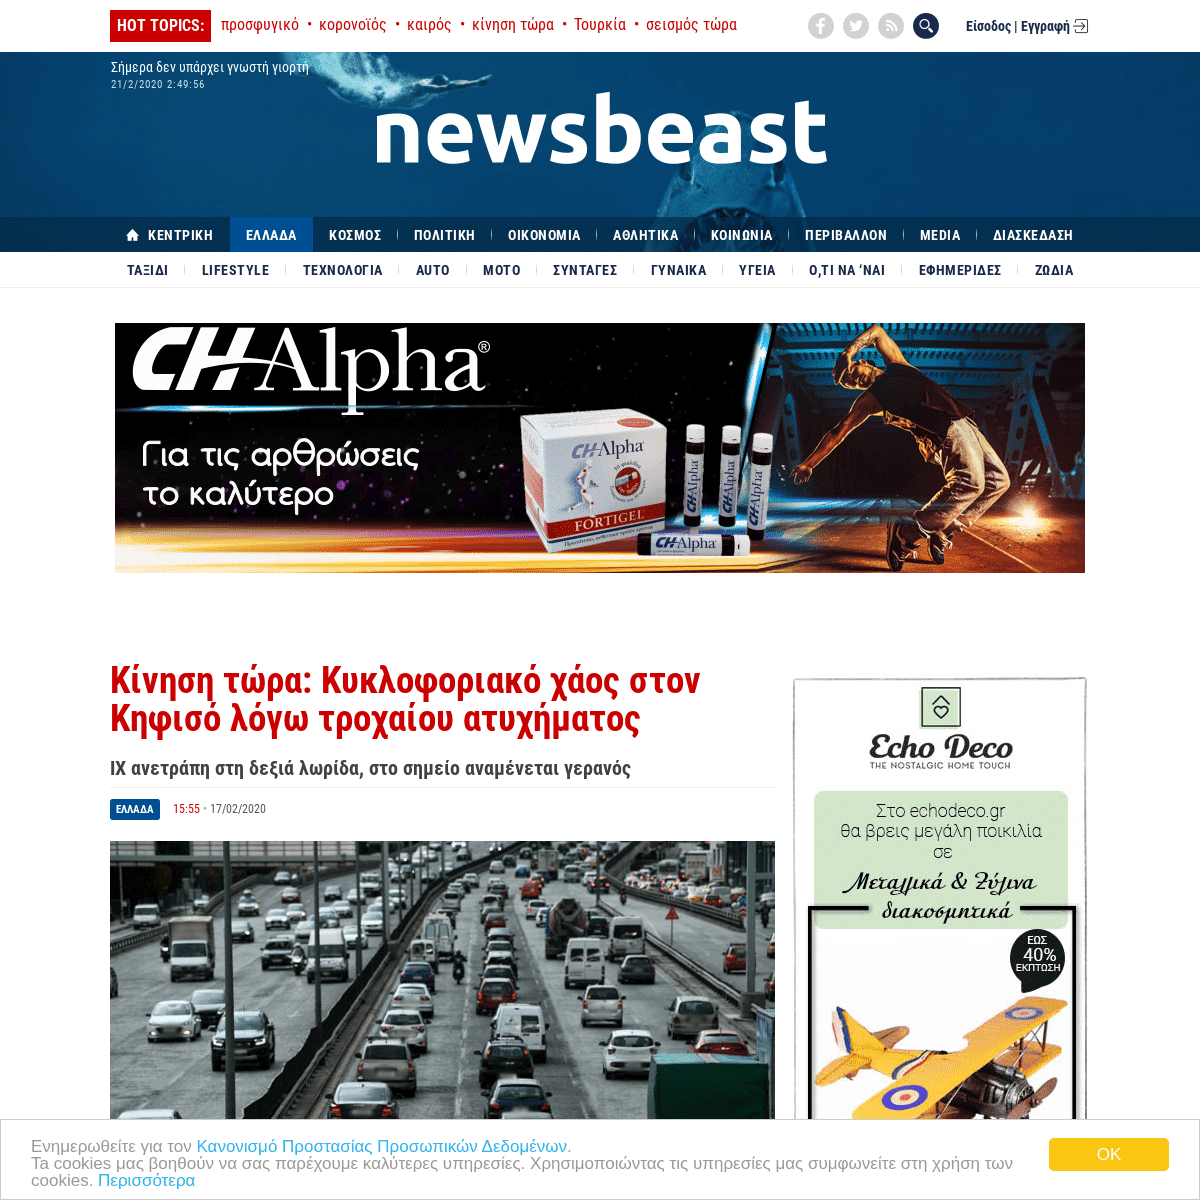 A complete backup of www.newsbeast.gr/greece/arthro/6026866/kinisi-tora-kykloforiako-chaos-ston-kifiso-logo-trochaioy-atychimato